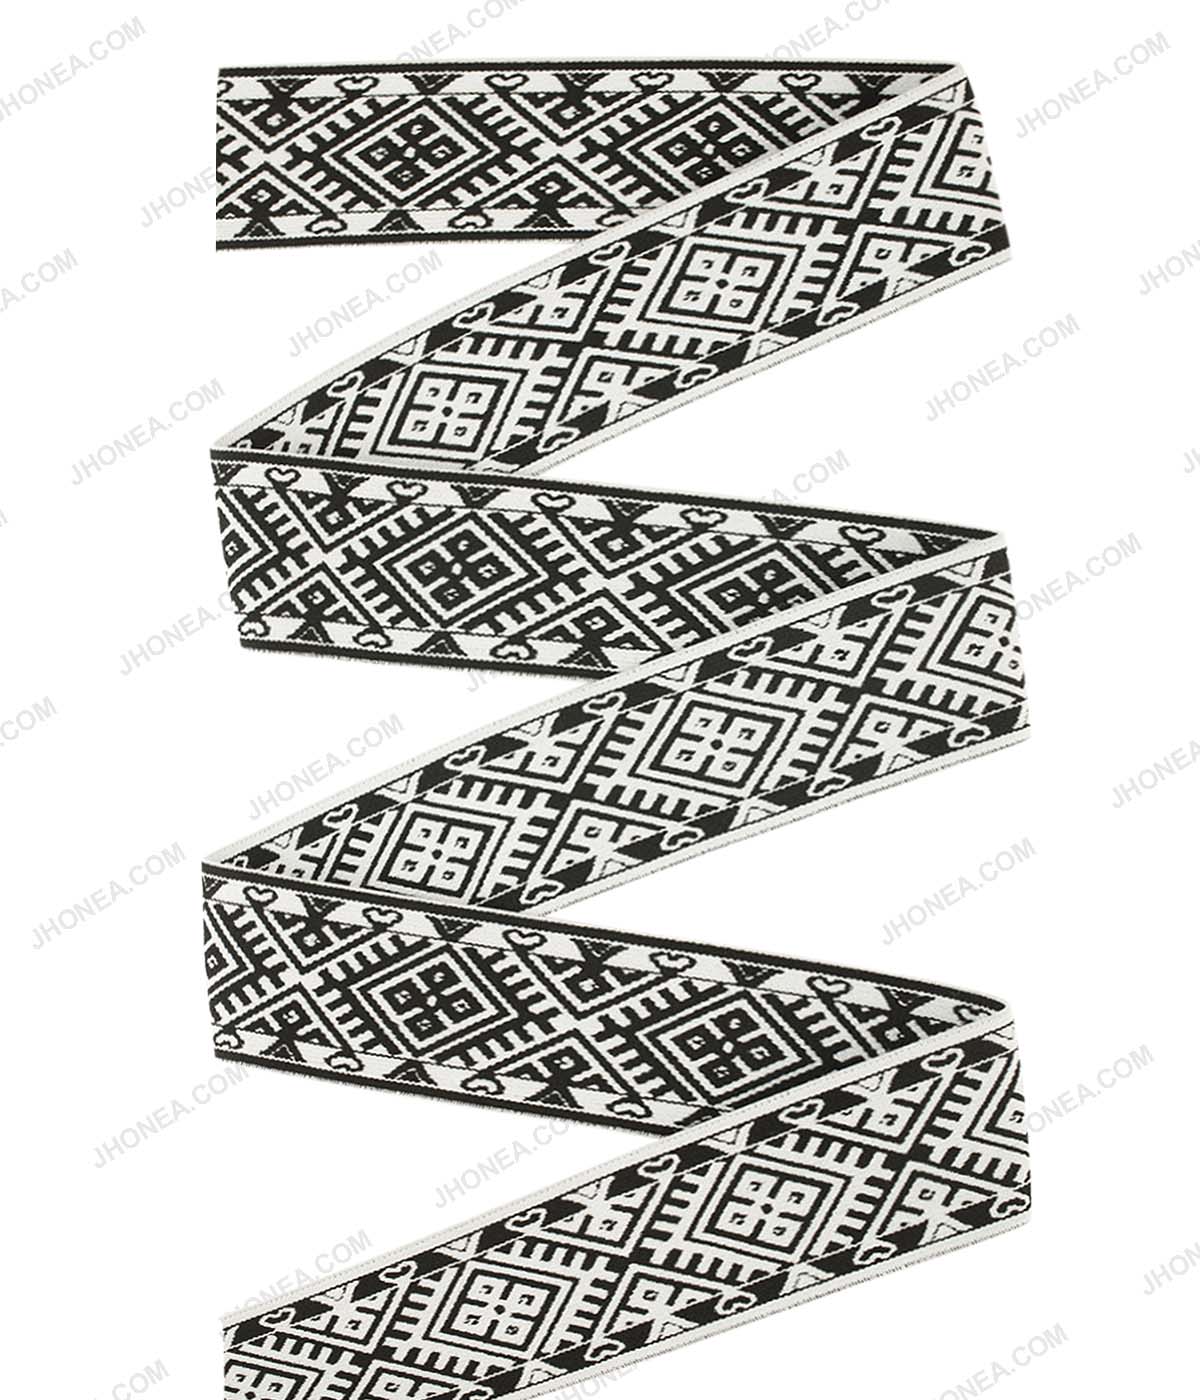 50mm (2inch) Wide Black & White Taniko Pattern Woven Jacquard Elastic